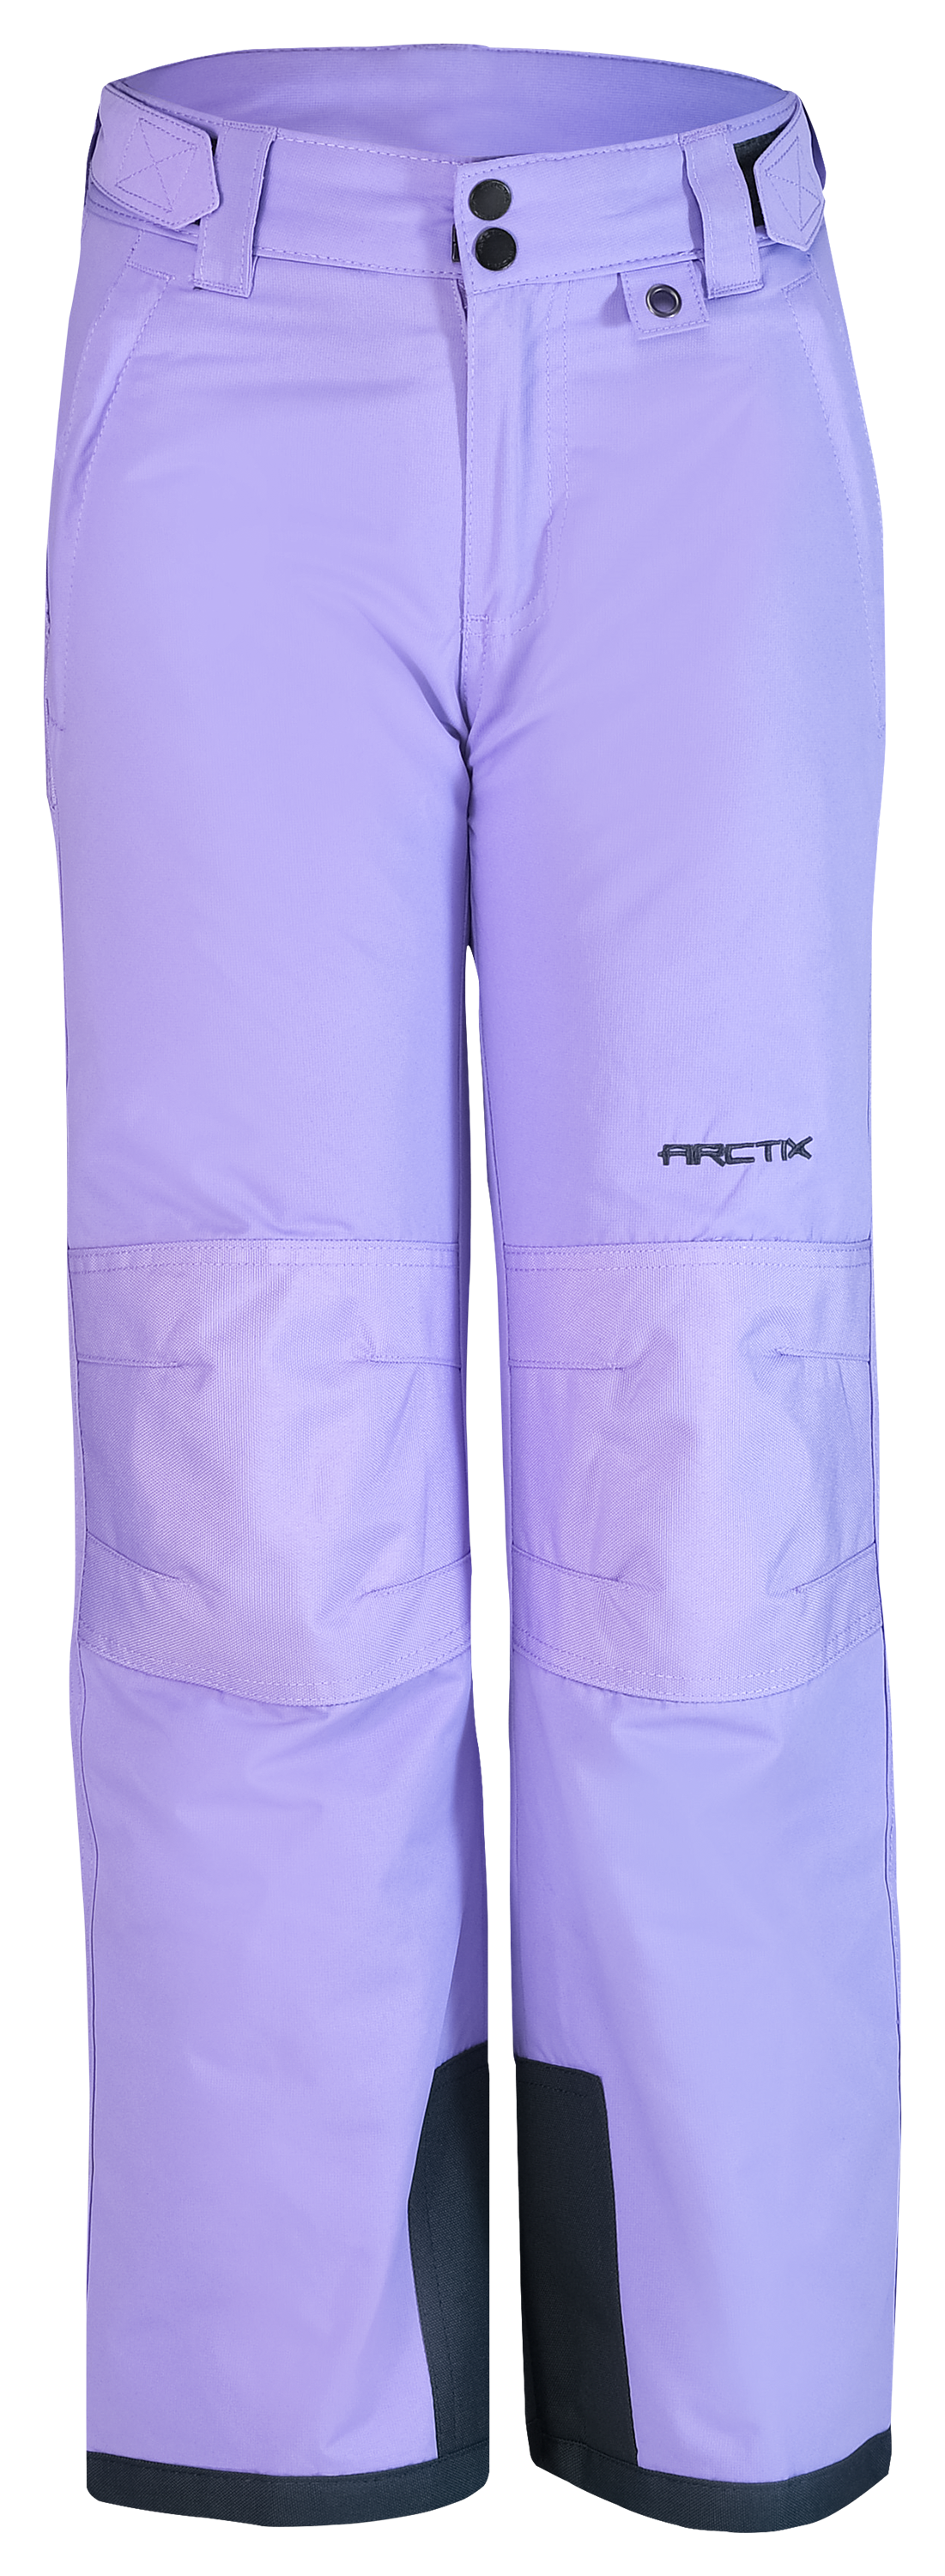 Arctix Women's Snow Sports Insulated Cargo Pants, Plum, X-Large Tall